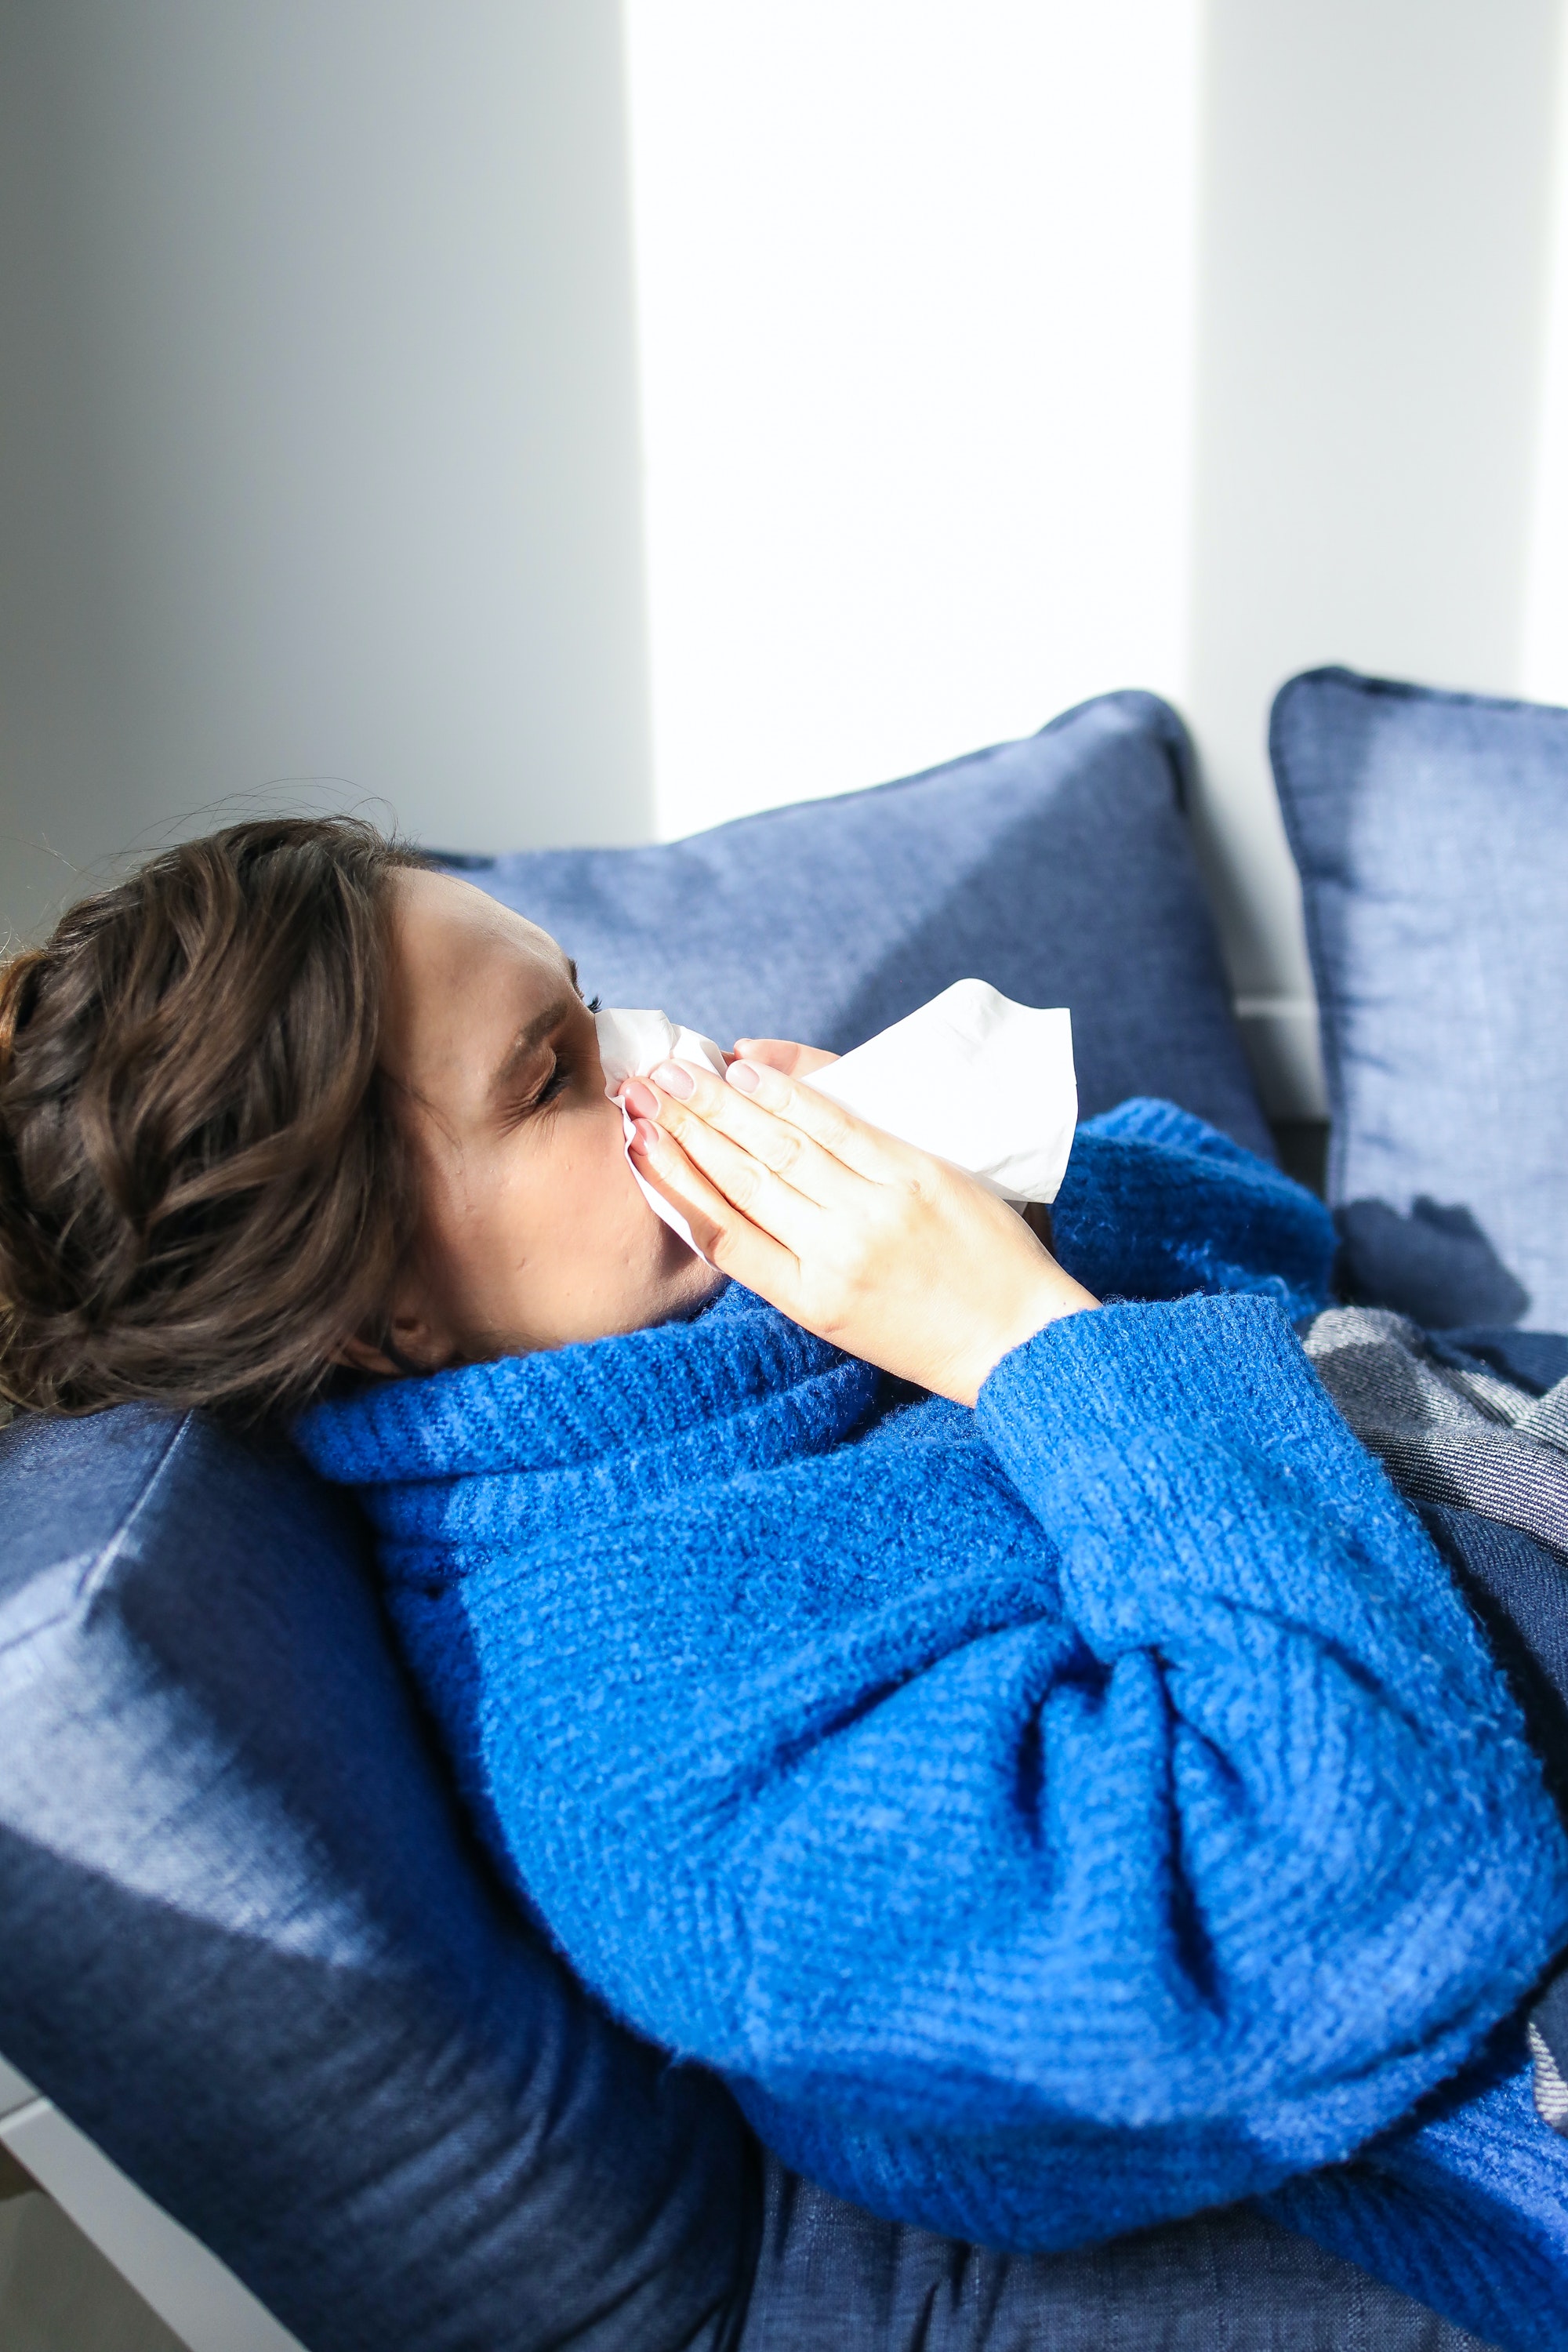 Covid, γρίπη ή RSV; 4 σημάδια που θα σε βοηθήσουν να καταλάβεις ποιον ιό έχεις